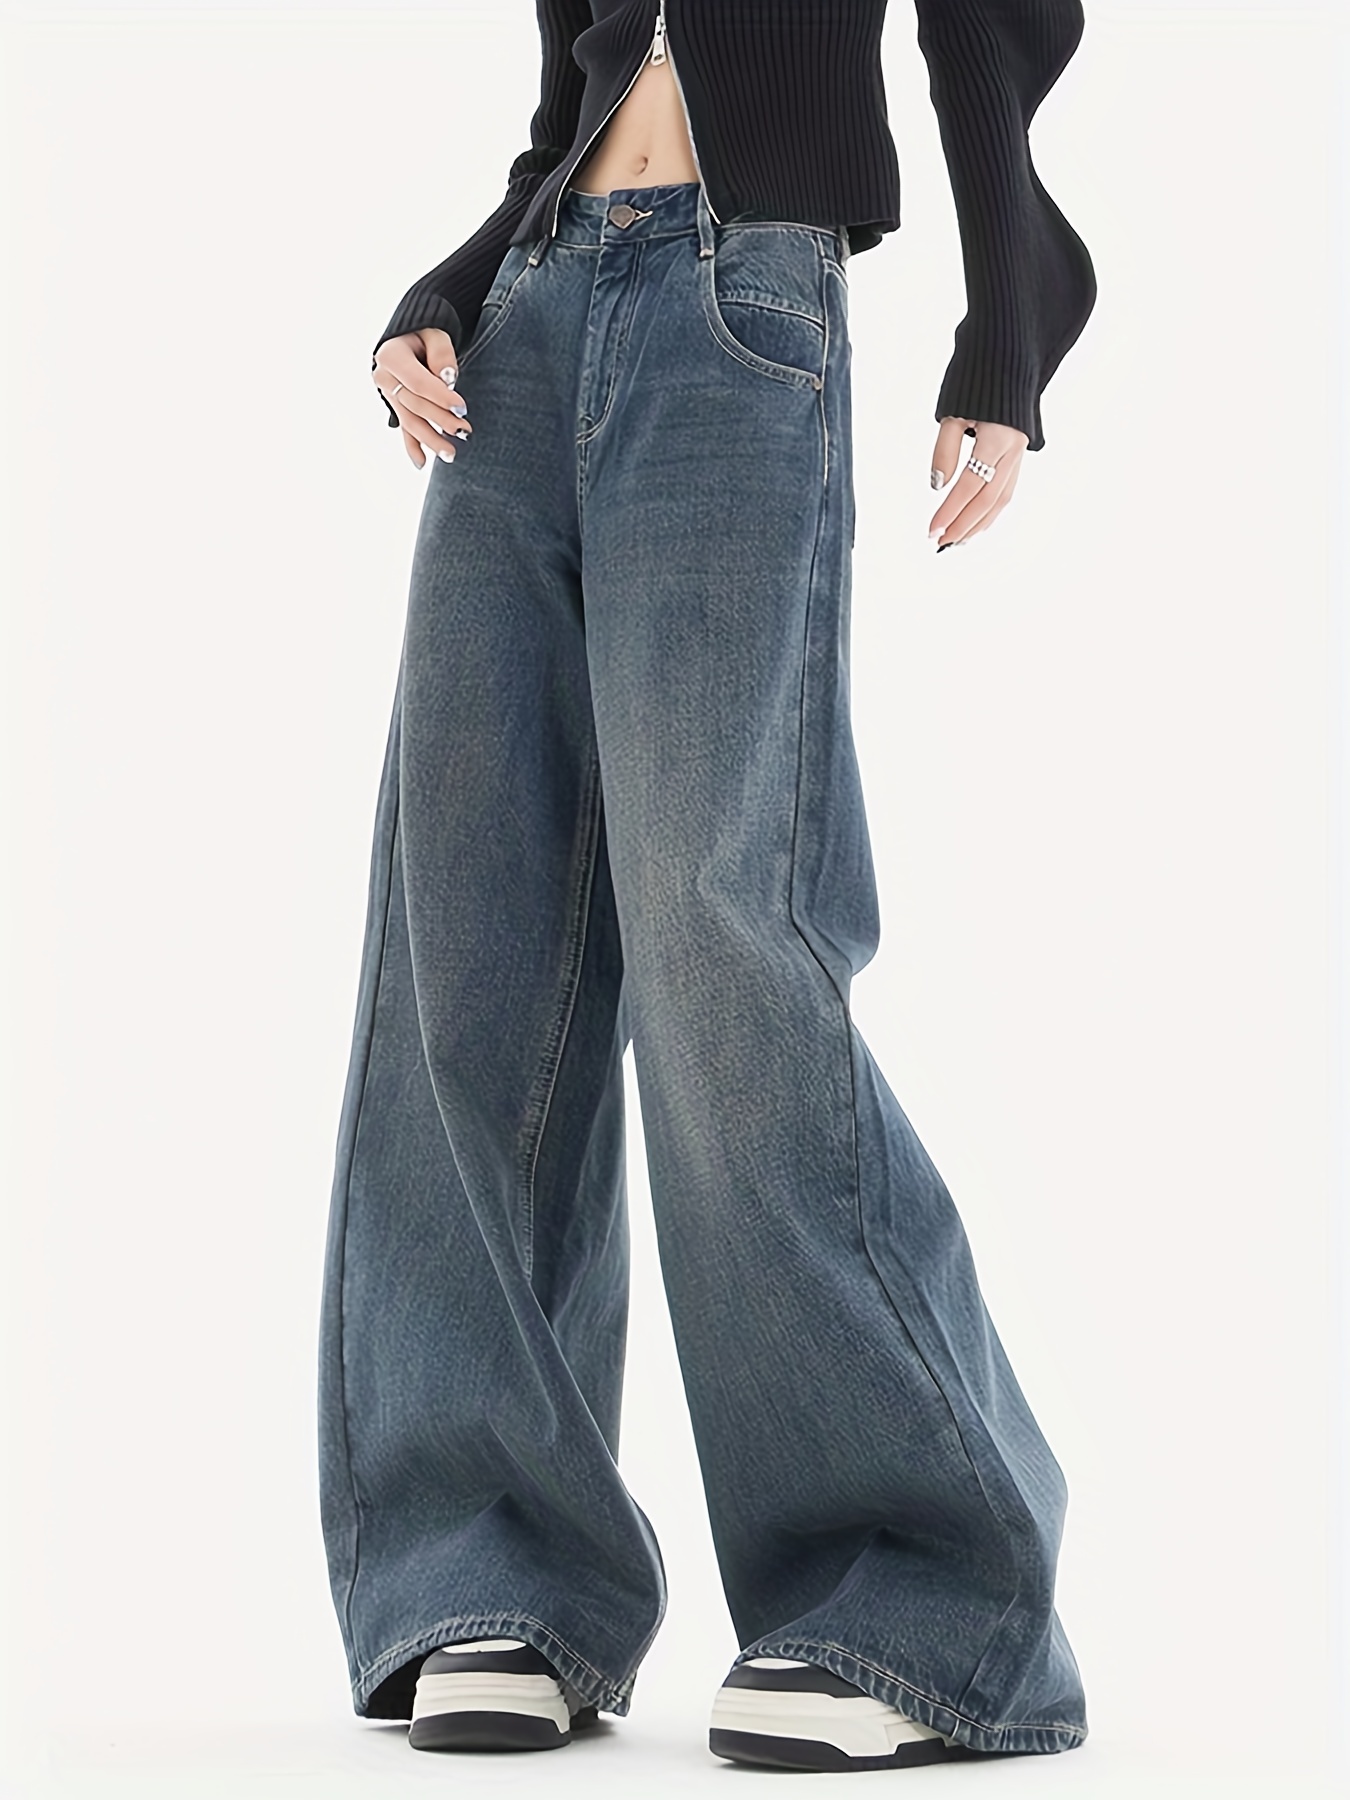 ZARA Wide Leg Full Length Ripped Jeans, Women's Fashion, Bottoms